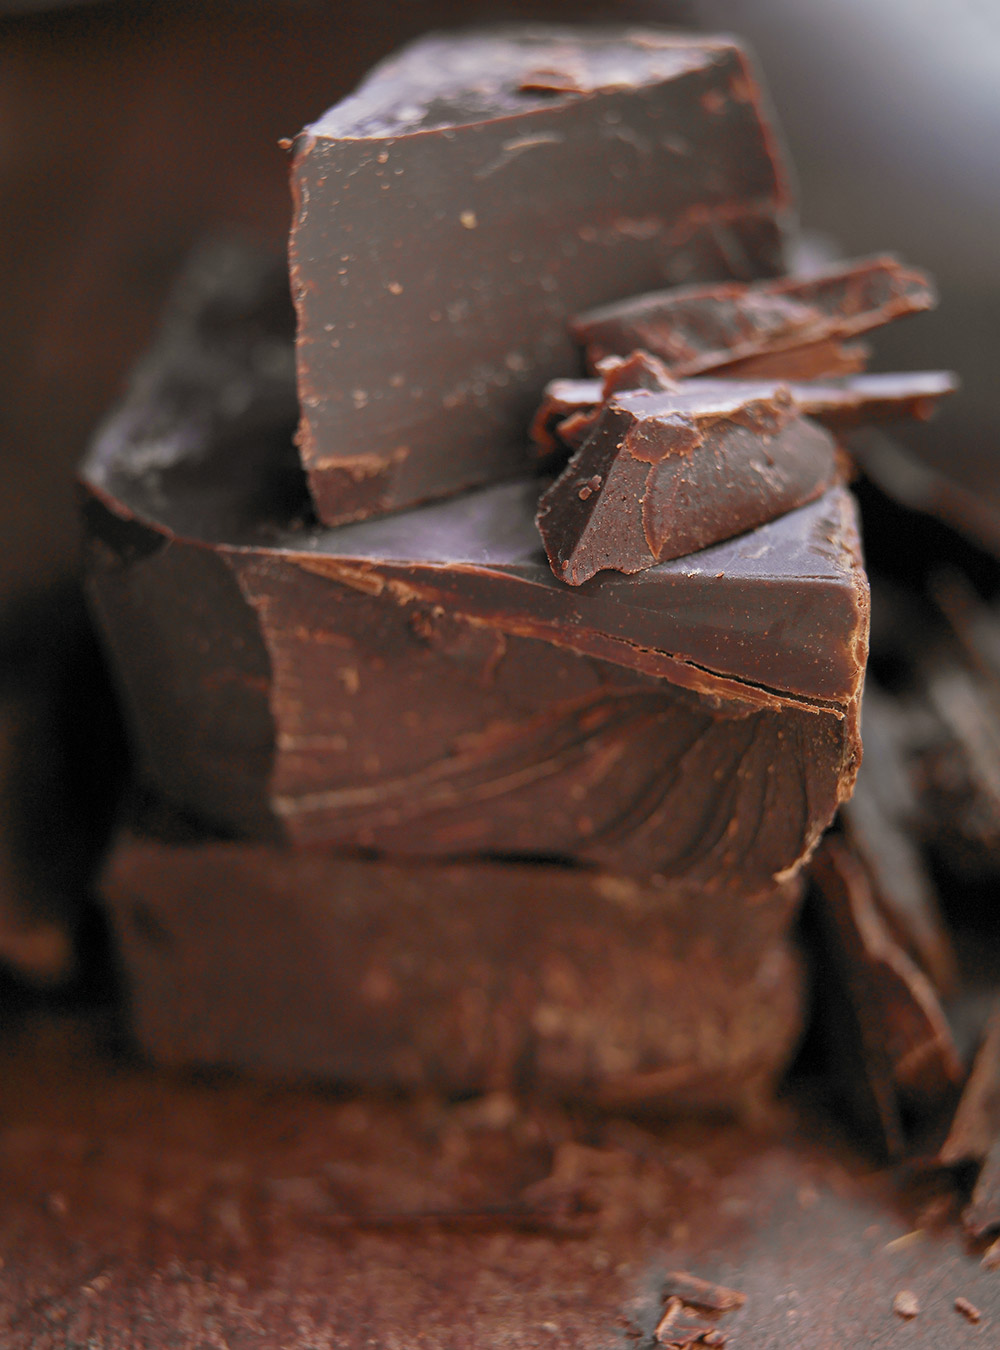 Boulettes au chocolat de Chrystine Brouillet (Chokladbollar)